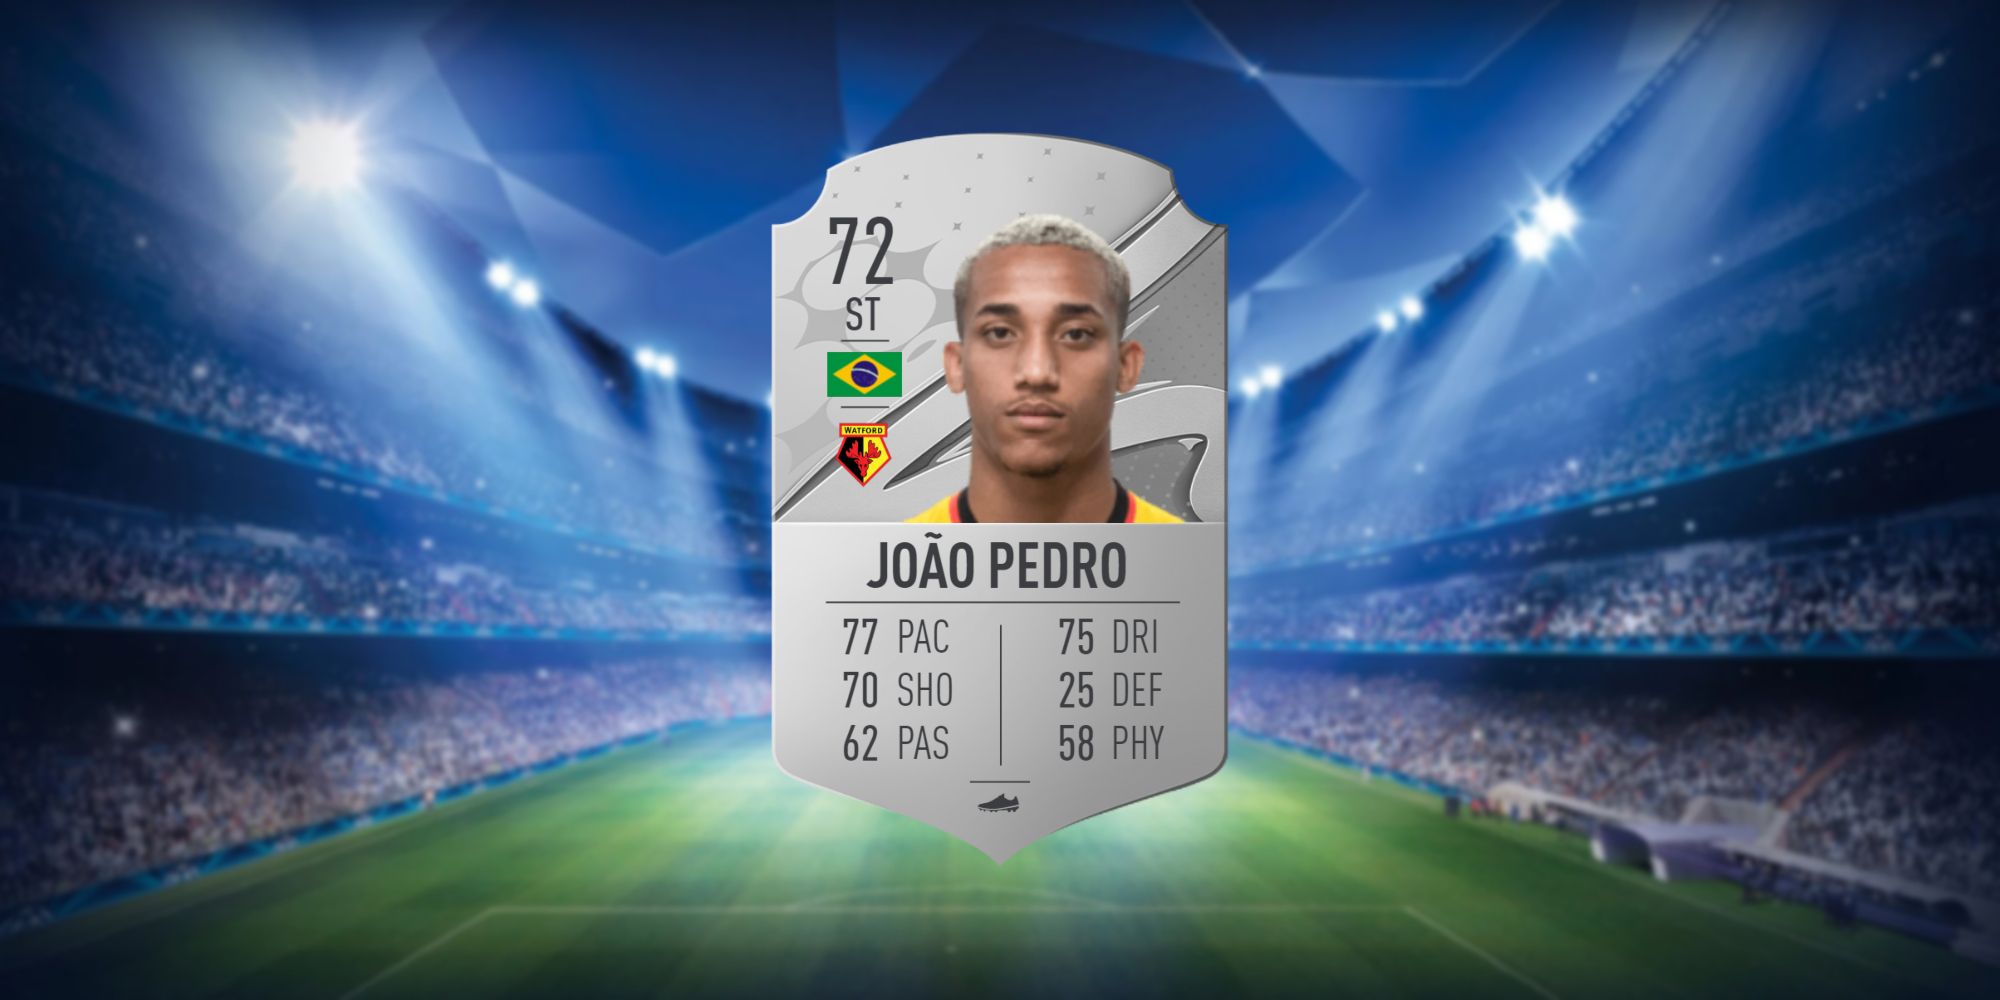 An image of João Pedro's FIFA 23 Card